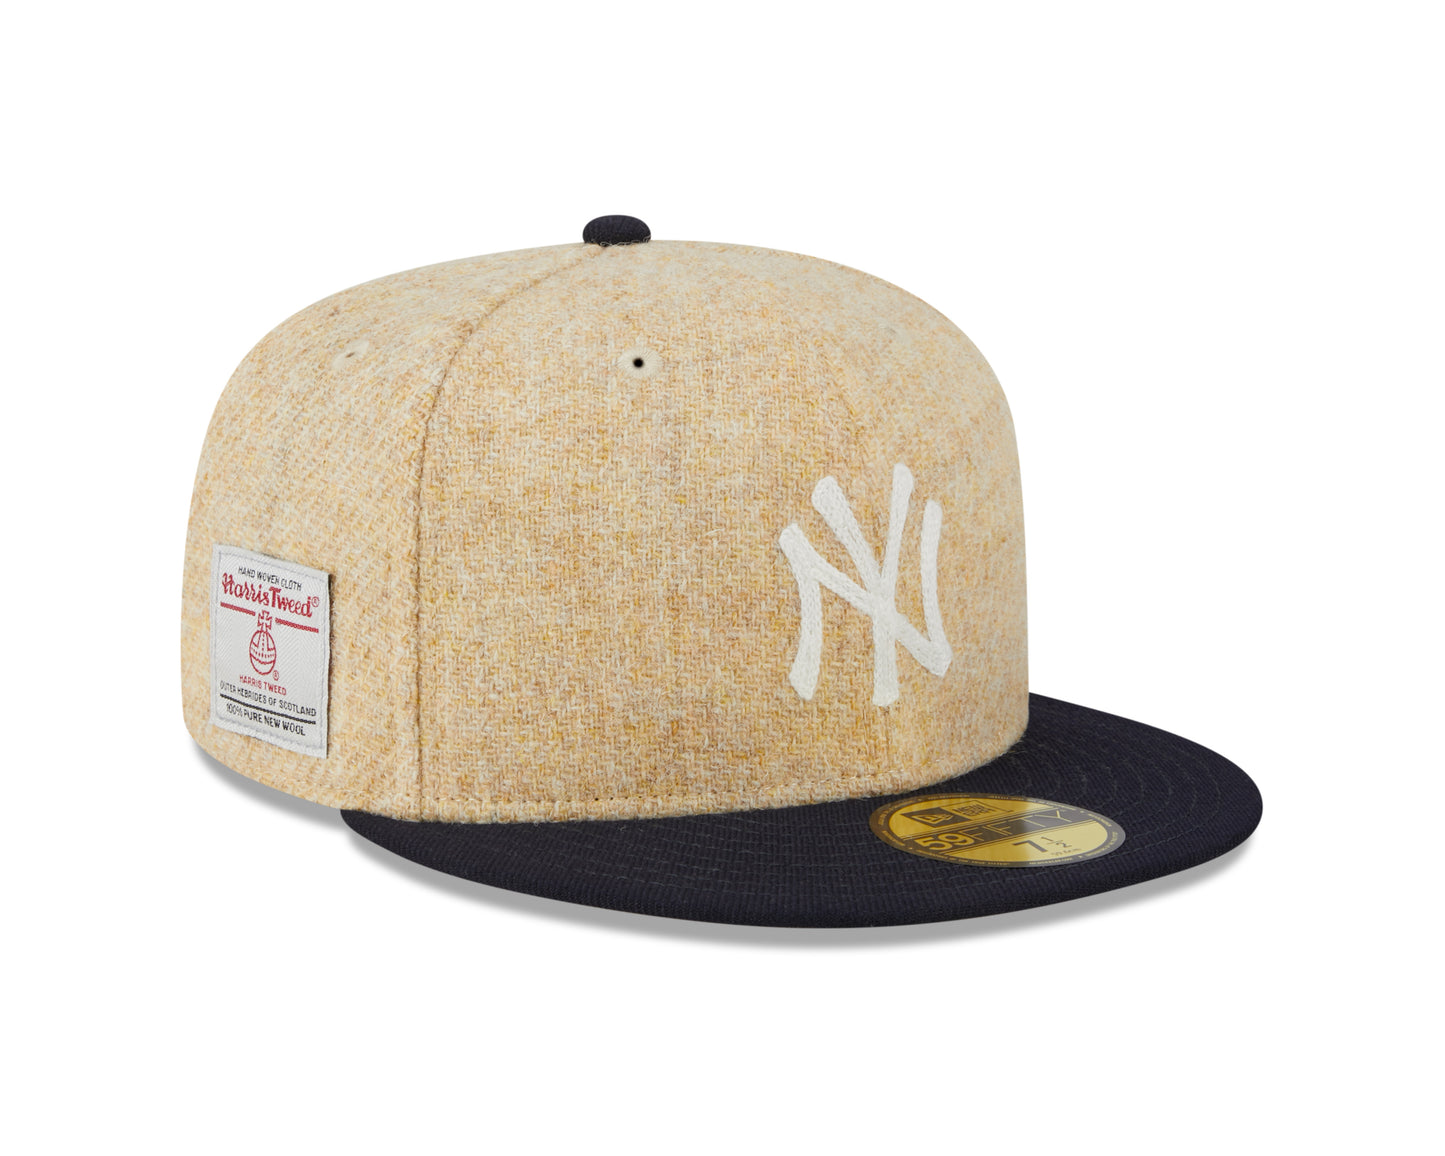 New Era - 59Fifty Fitted Cap - HARRIS TWEED - New York Yankees - XTN - Headz Up 